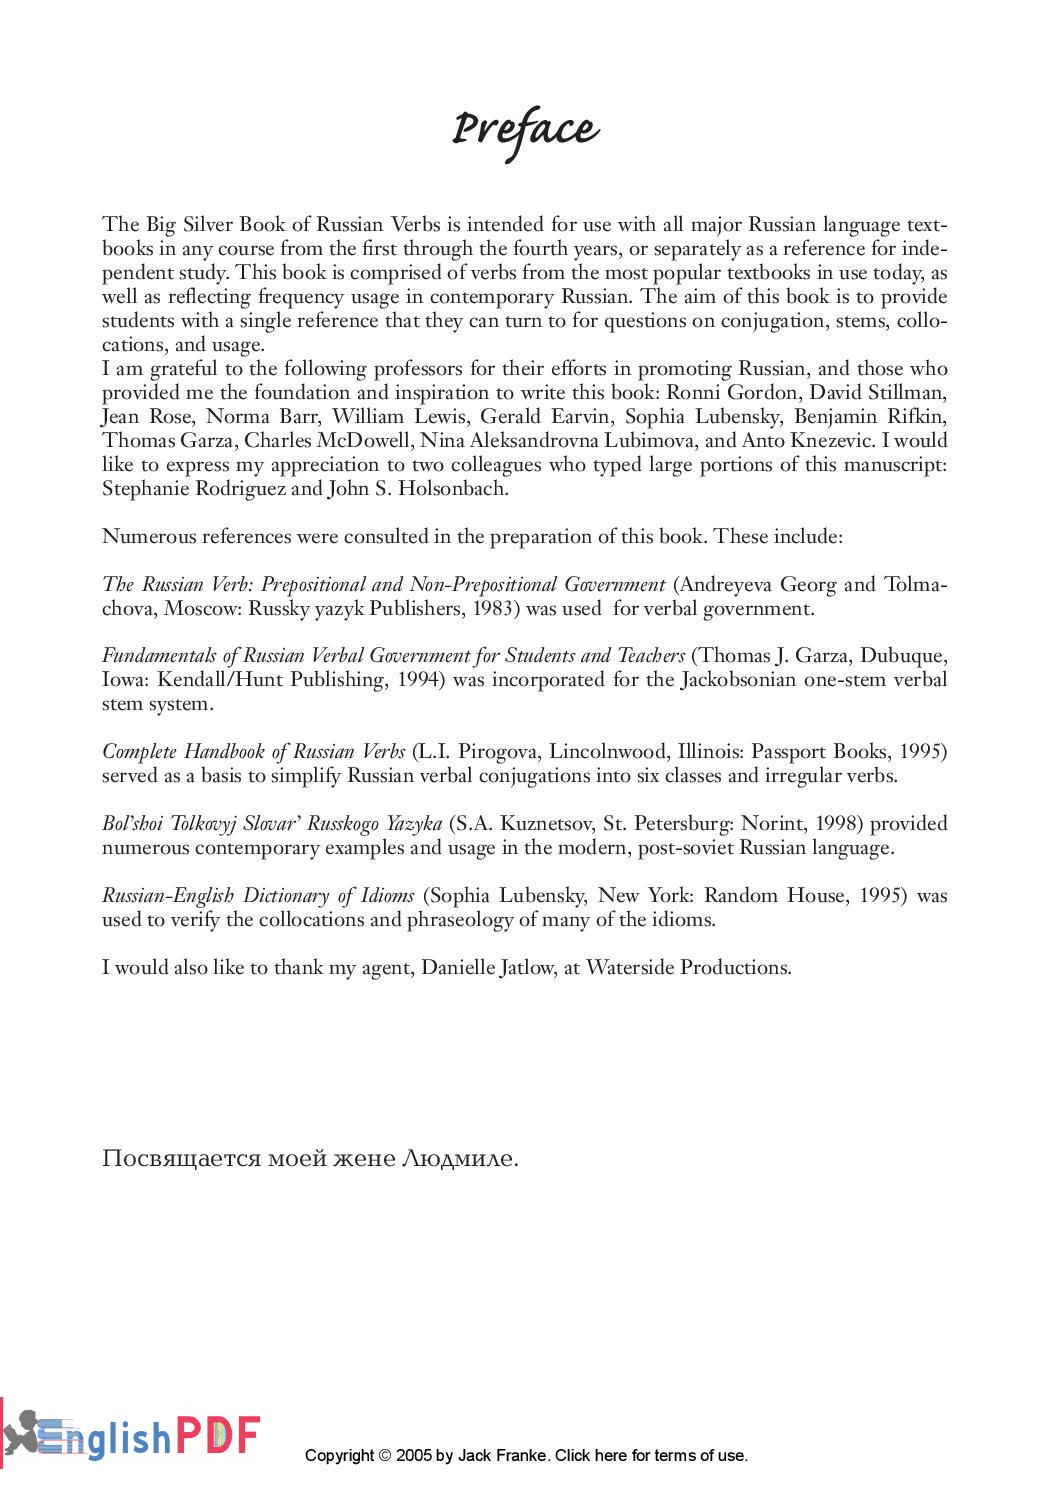 The Big Silver Book of Russian Verbs PDF Jack Franke EnglishPDF page 003